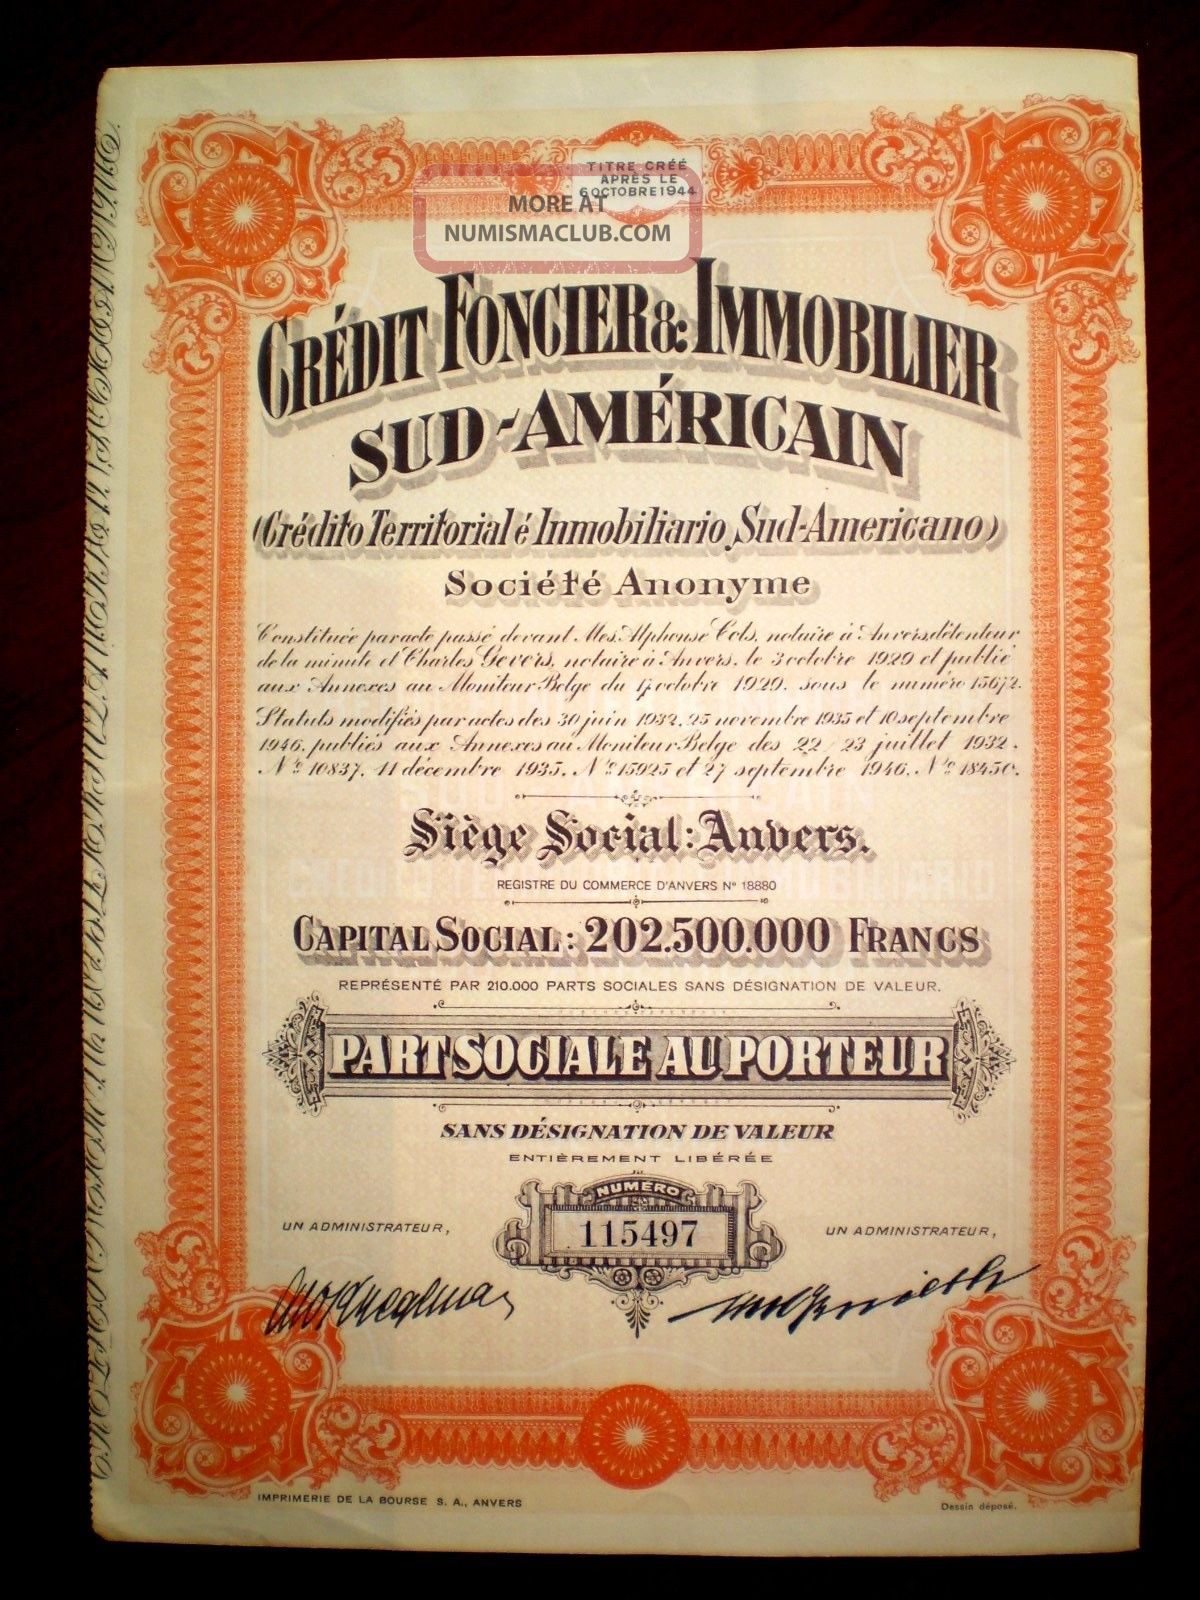 Credit Foncier & Inmobilier Sud - Américain 1946 Argentina Share Certificate World photo